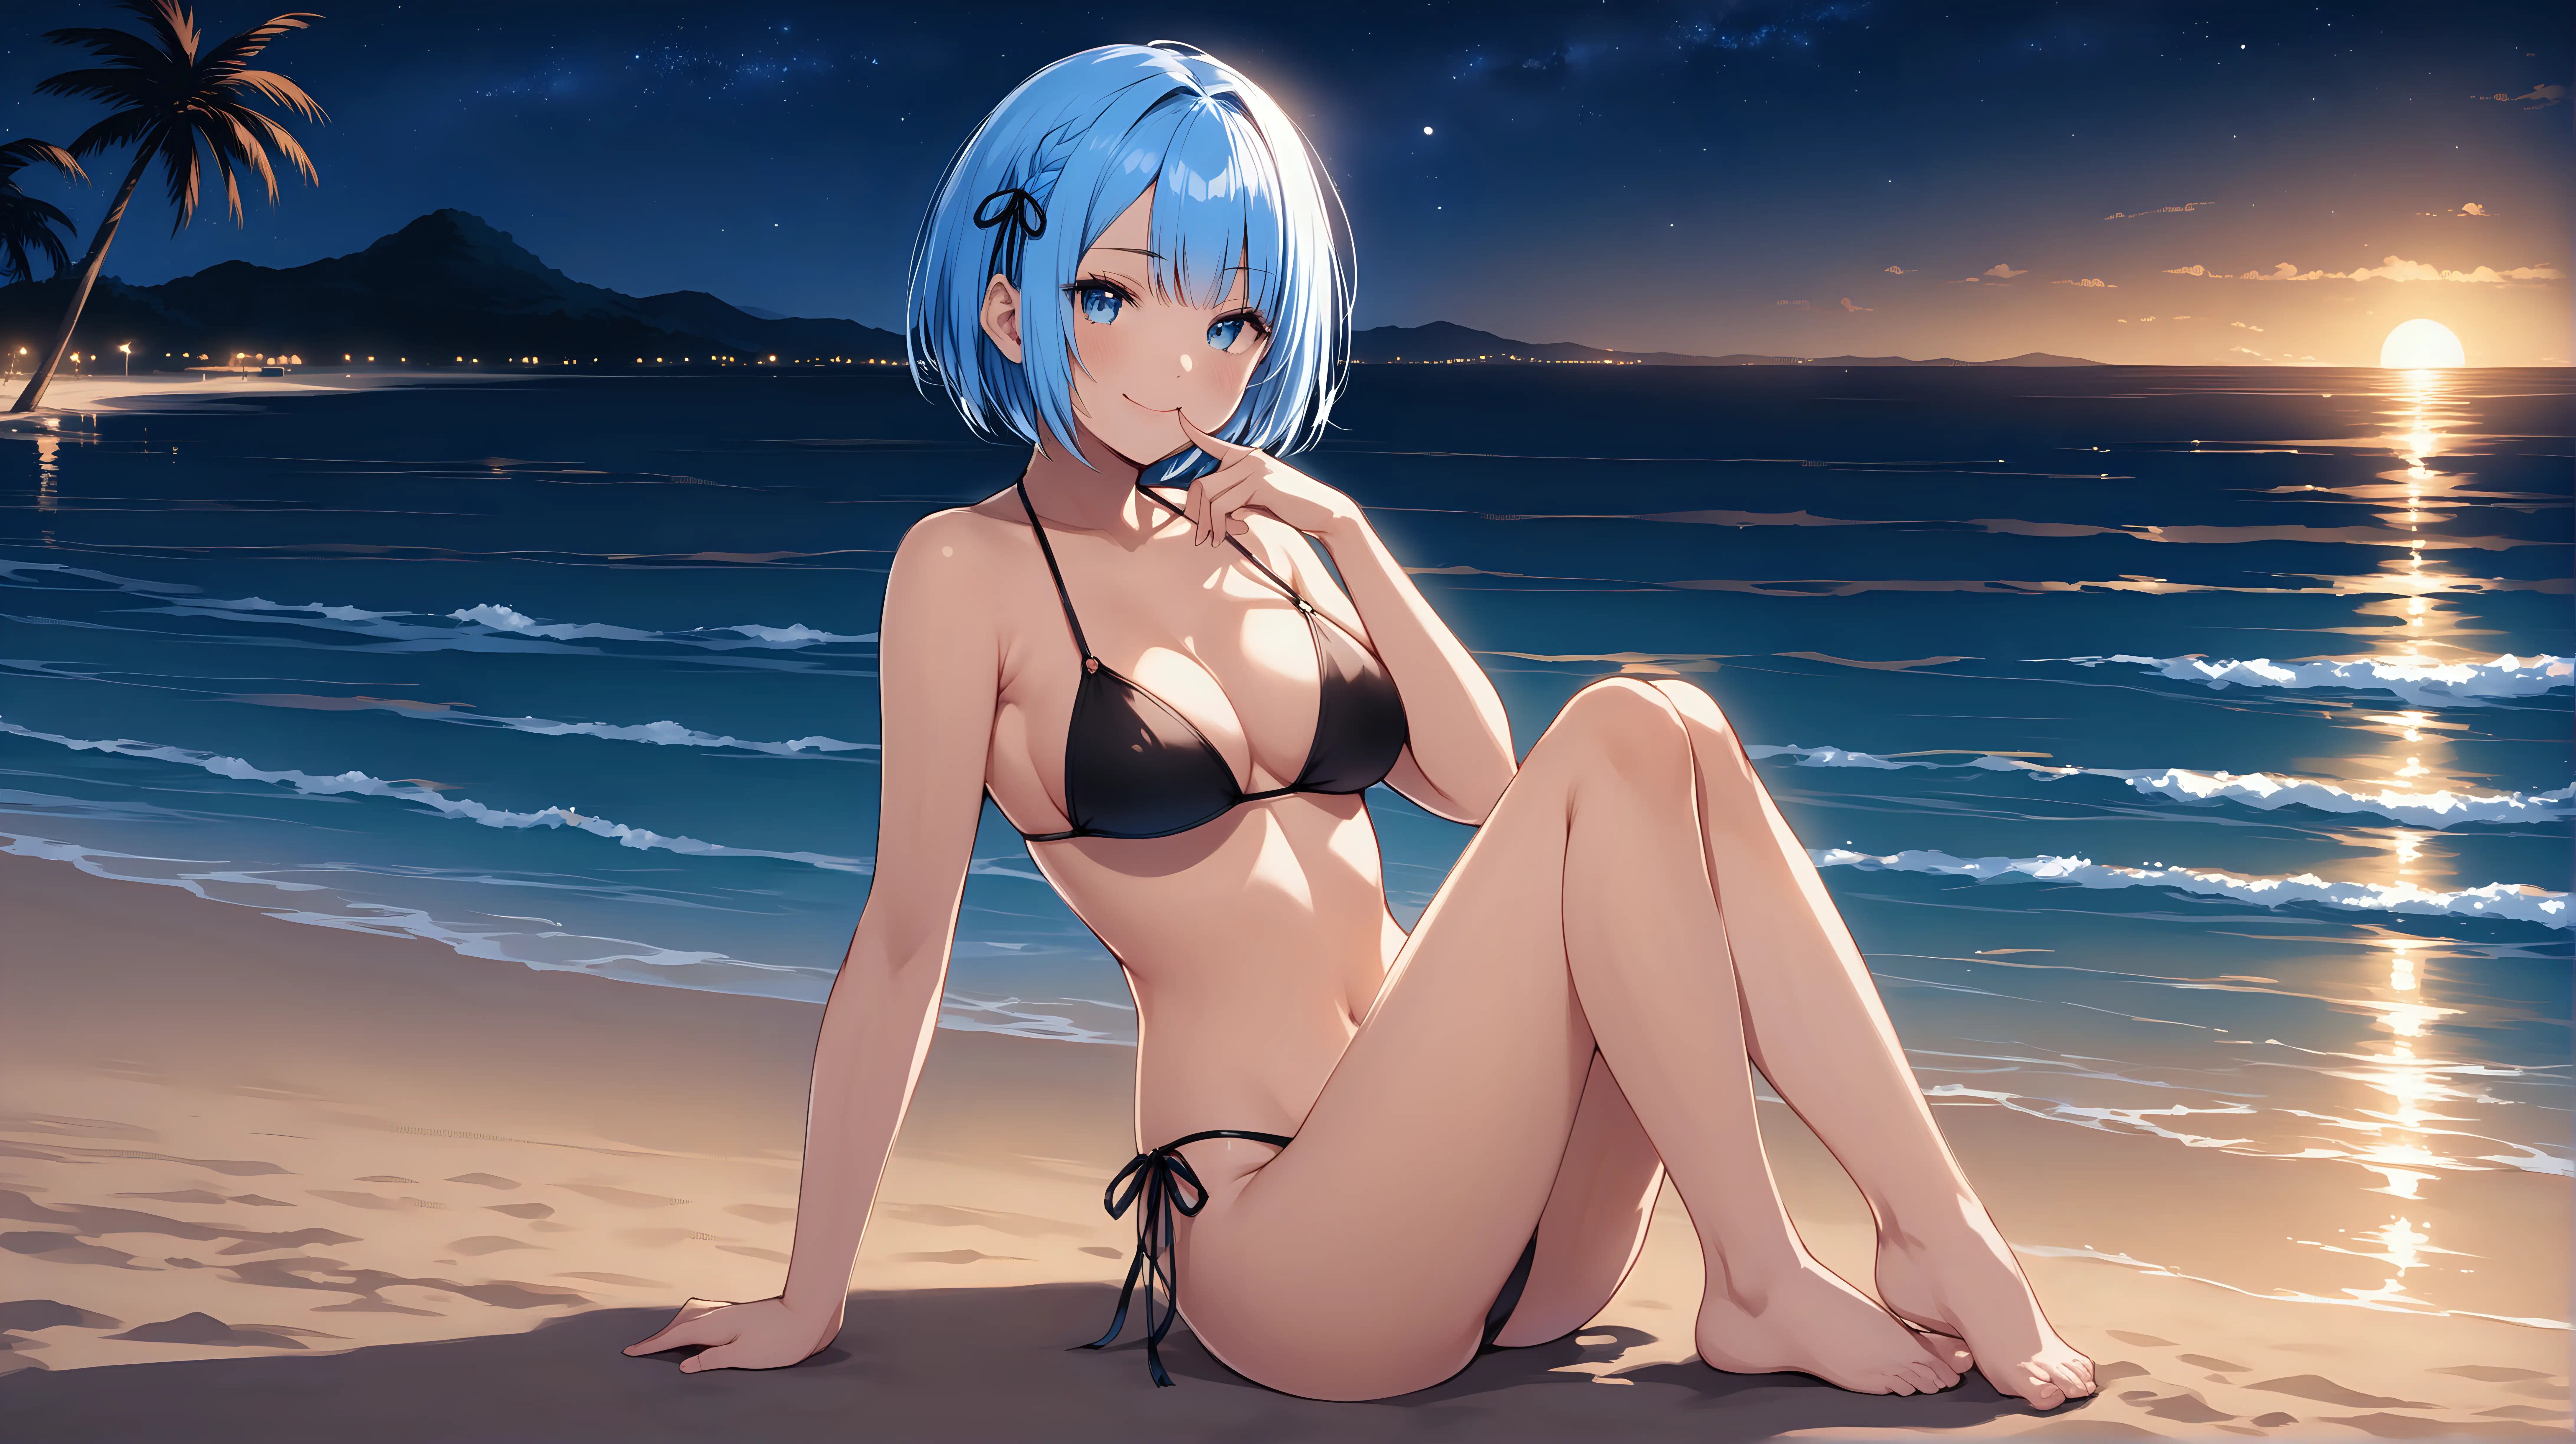 Rem Sitting Alone on Beach at Night Smiling in Bikini